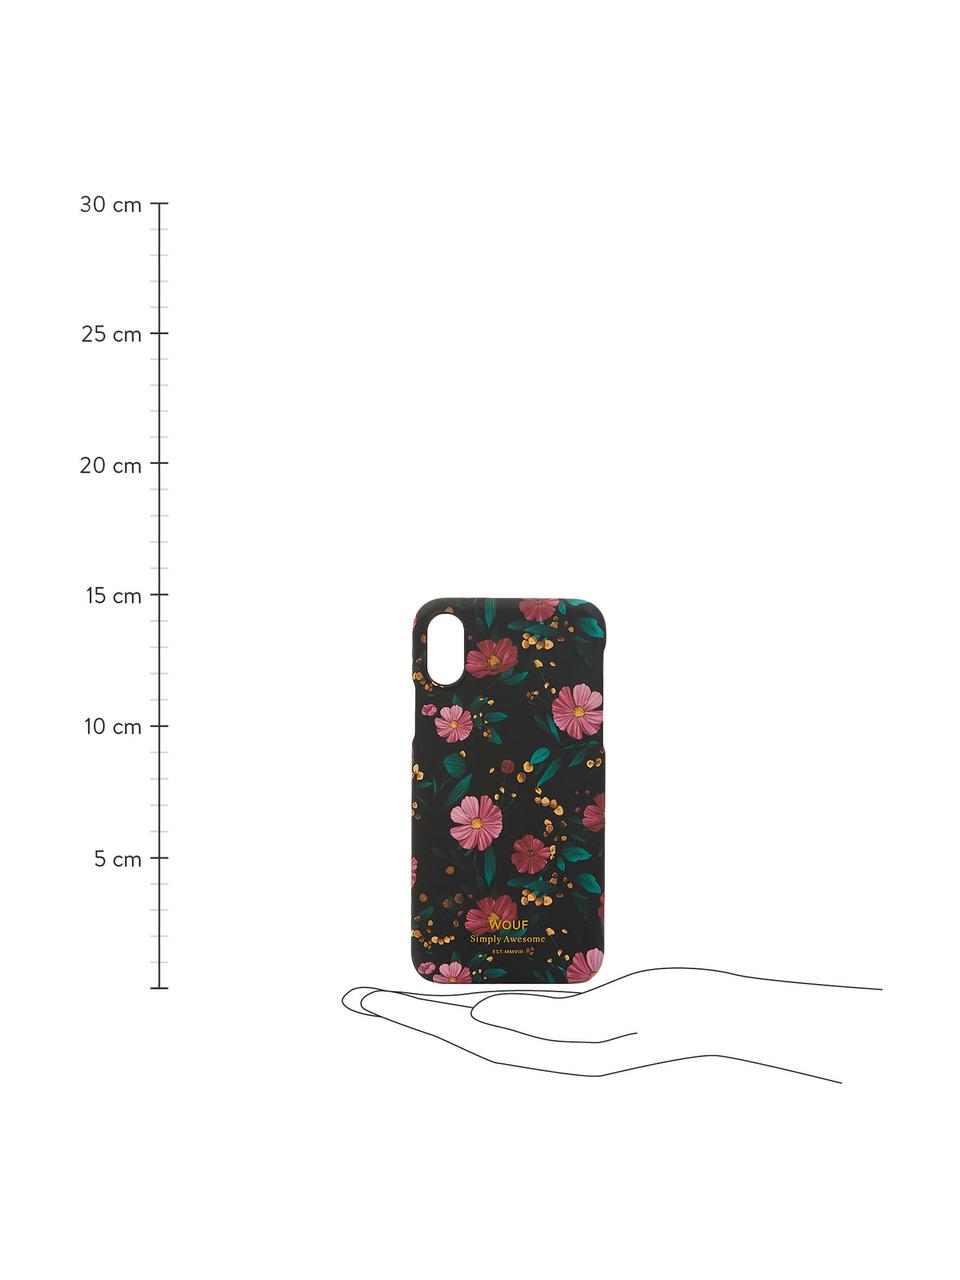 Hülle Black Flowers für iPhone X, Silikon, Schwarz, Mehrfarbig, 7 x 15 cm